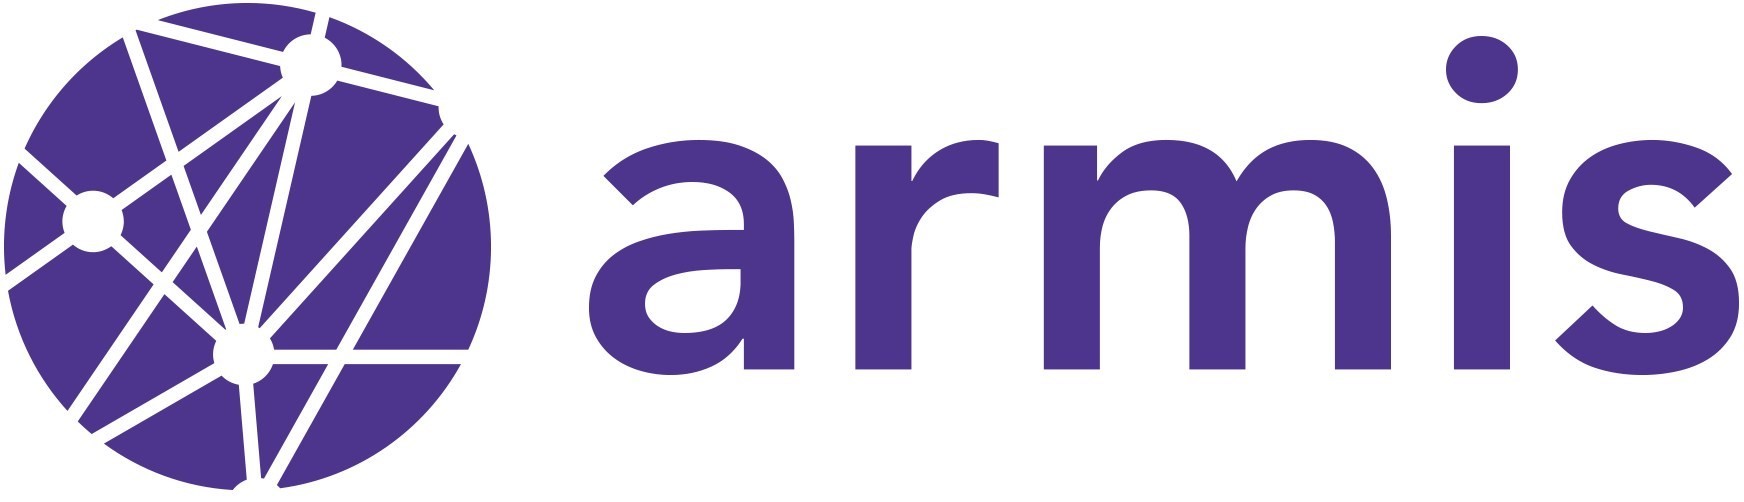 Armis logo